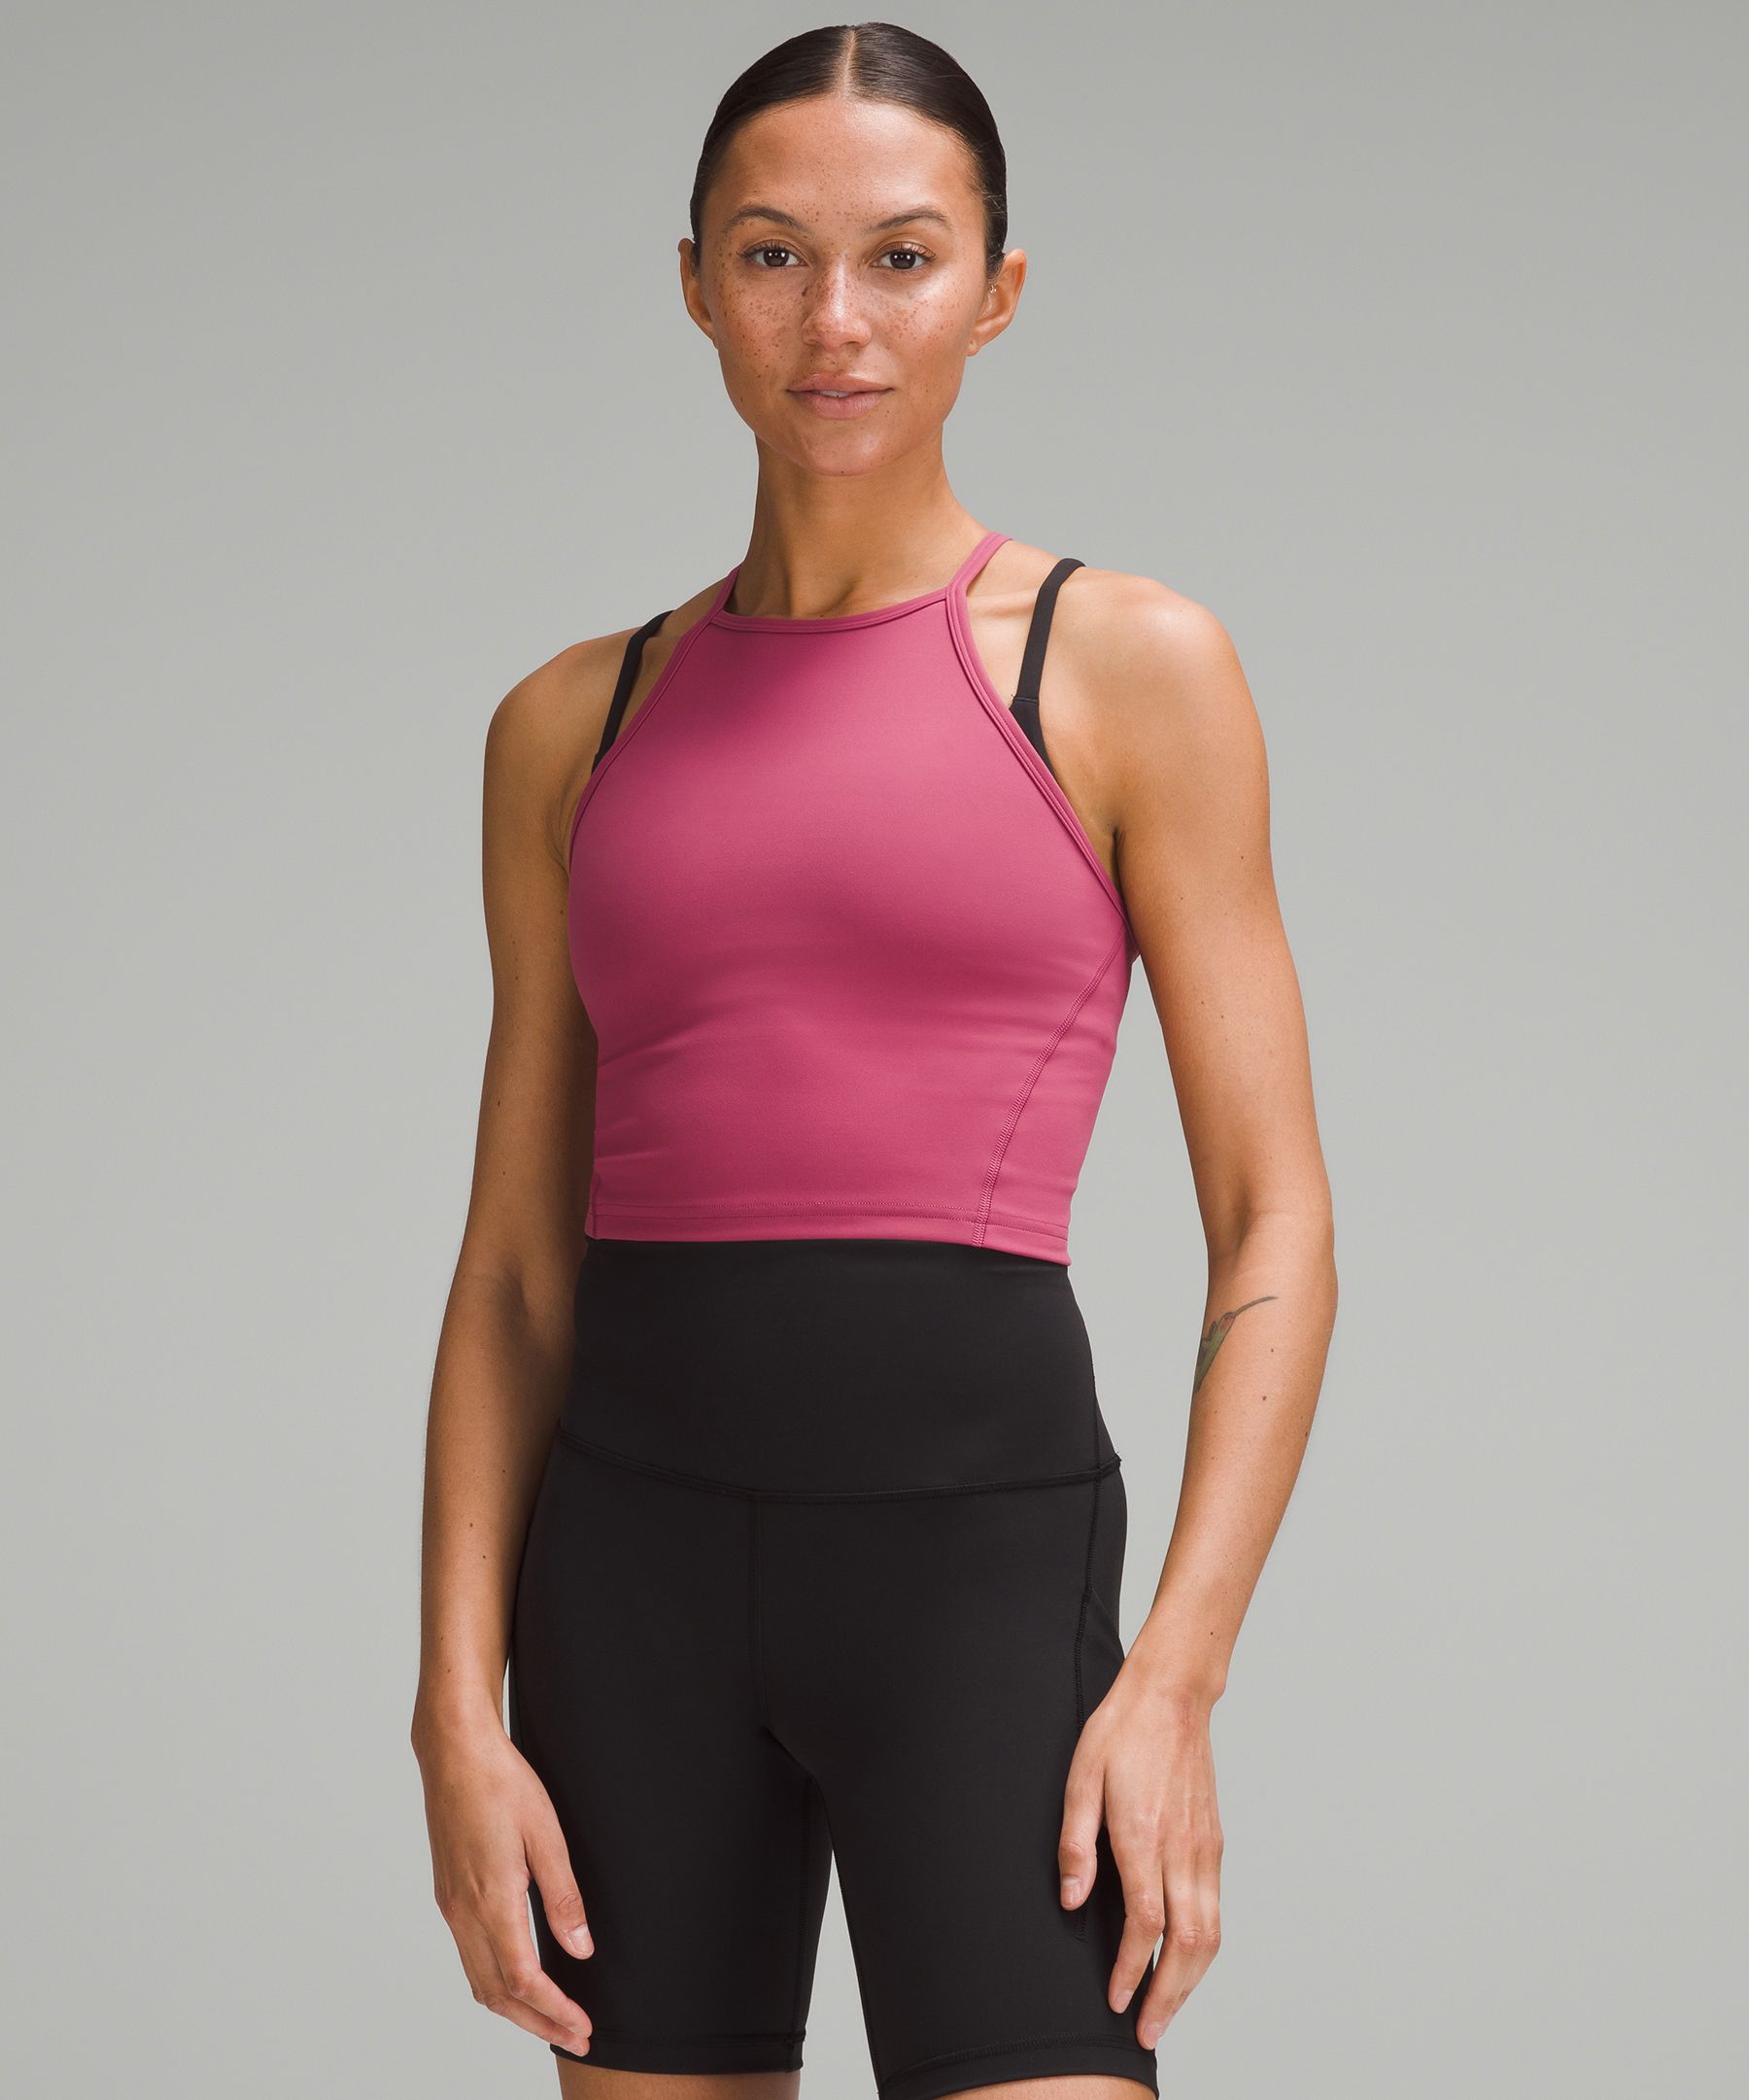 Lululemon Womens Heather Gray Built-In Sports Bra Sleeveless Tank Top Size 4